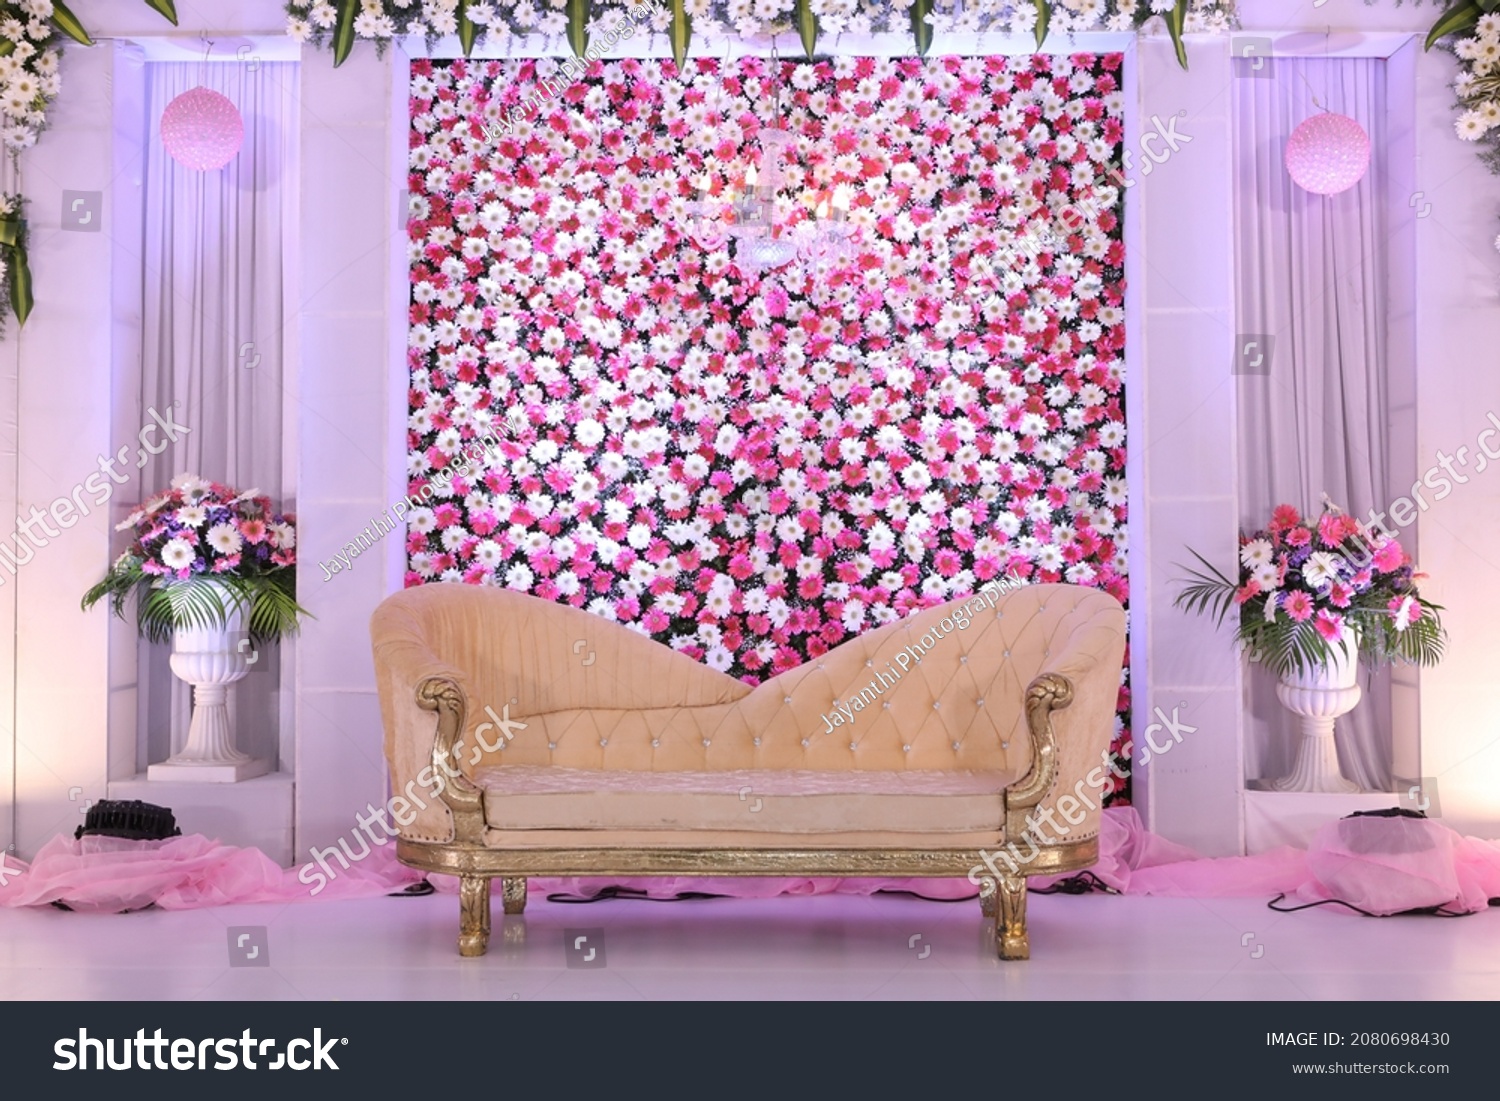 Humano canal burbuja House Decoration For Wedding Wholesale, Save 58% | jlcatj.gob.mx